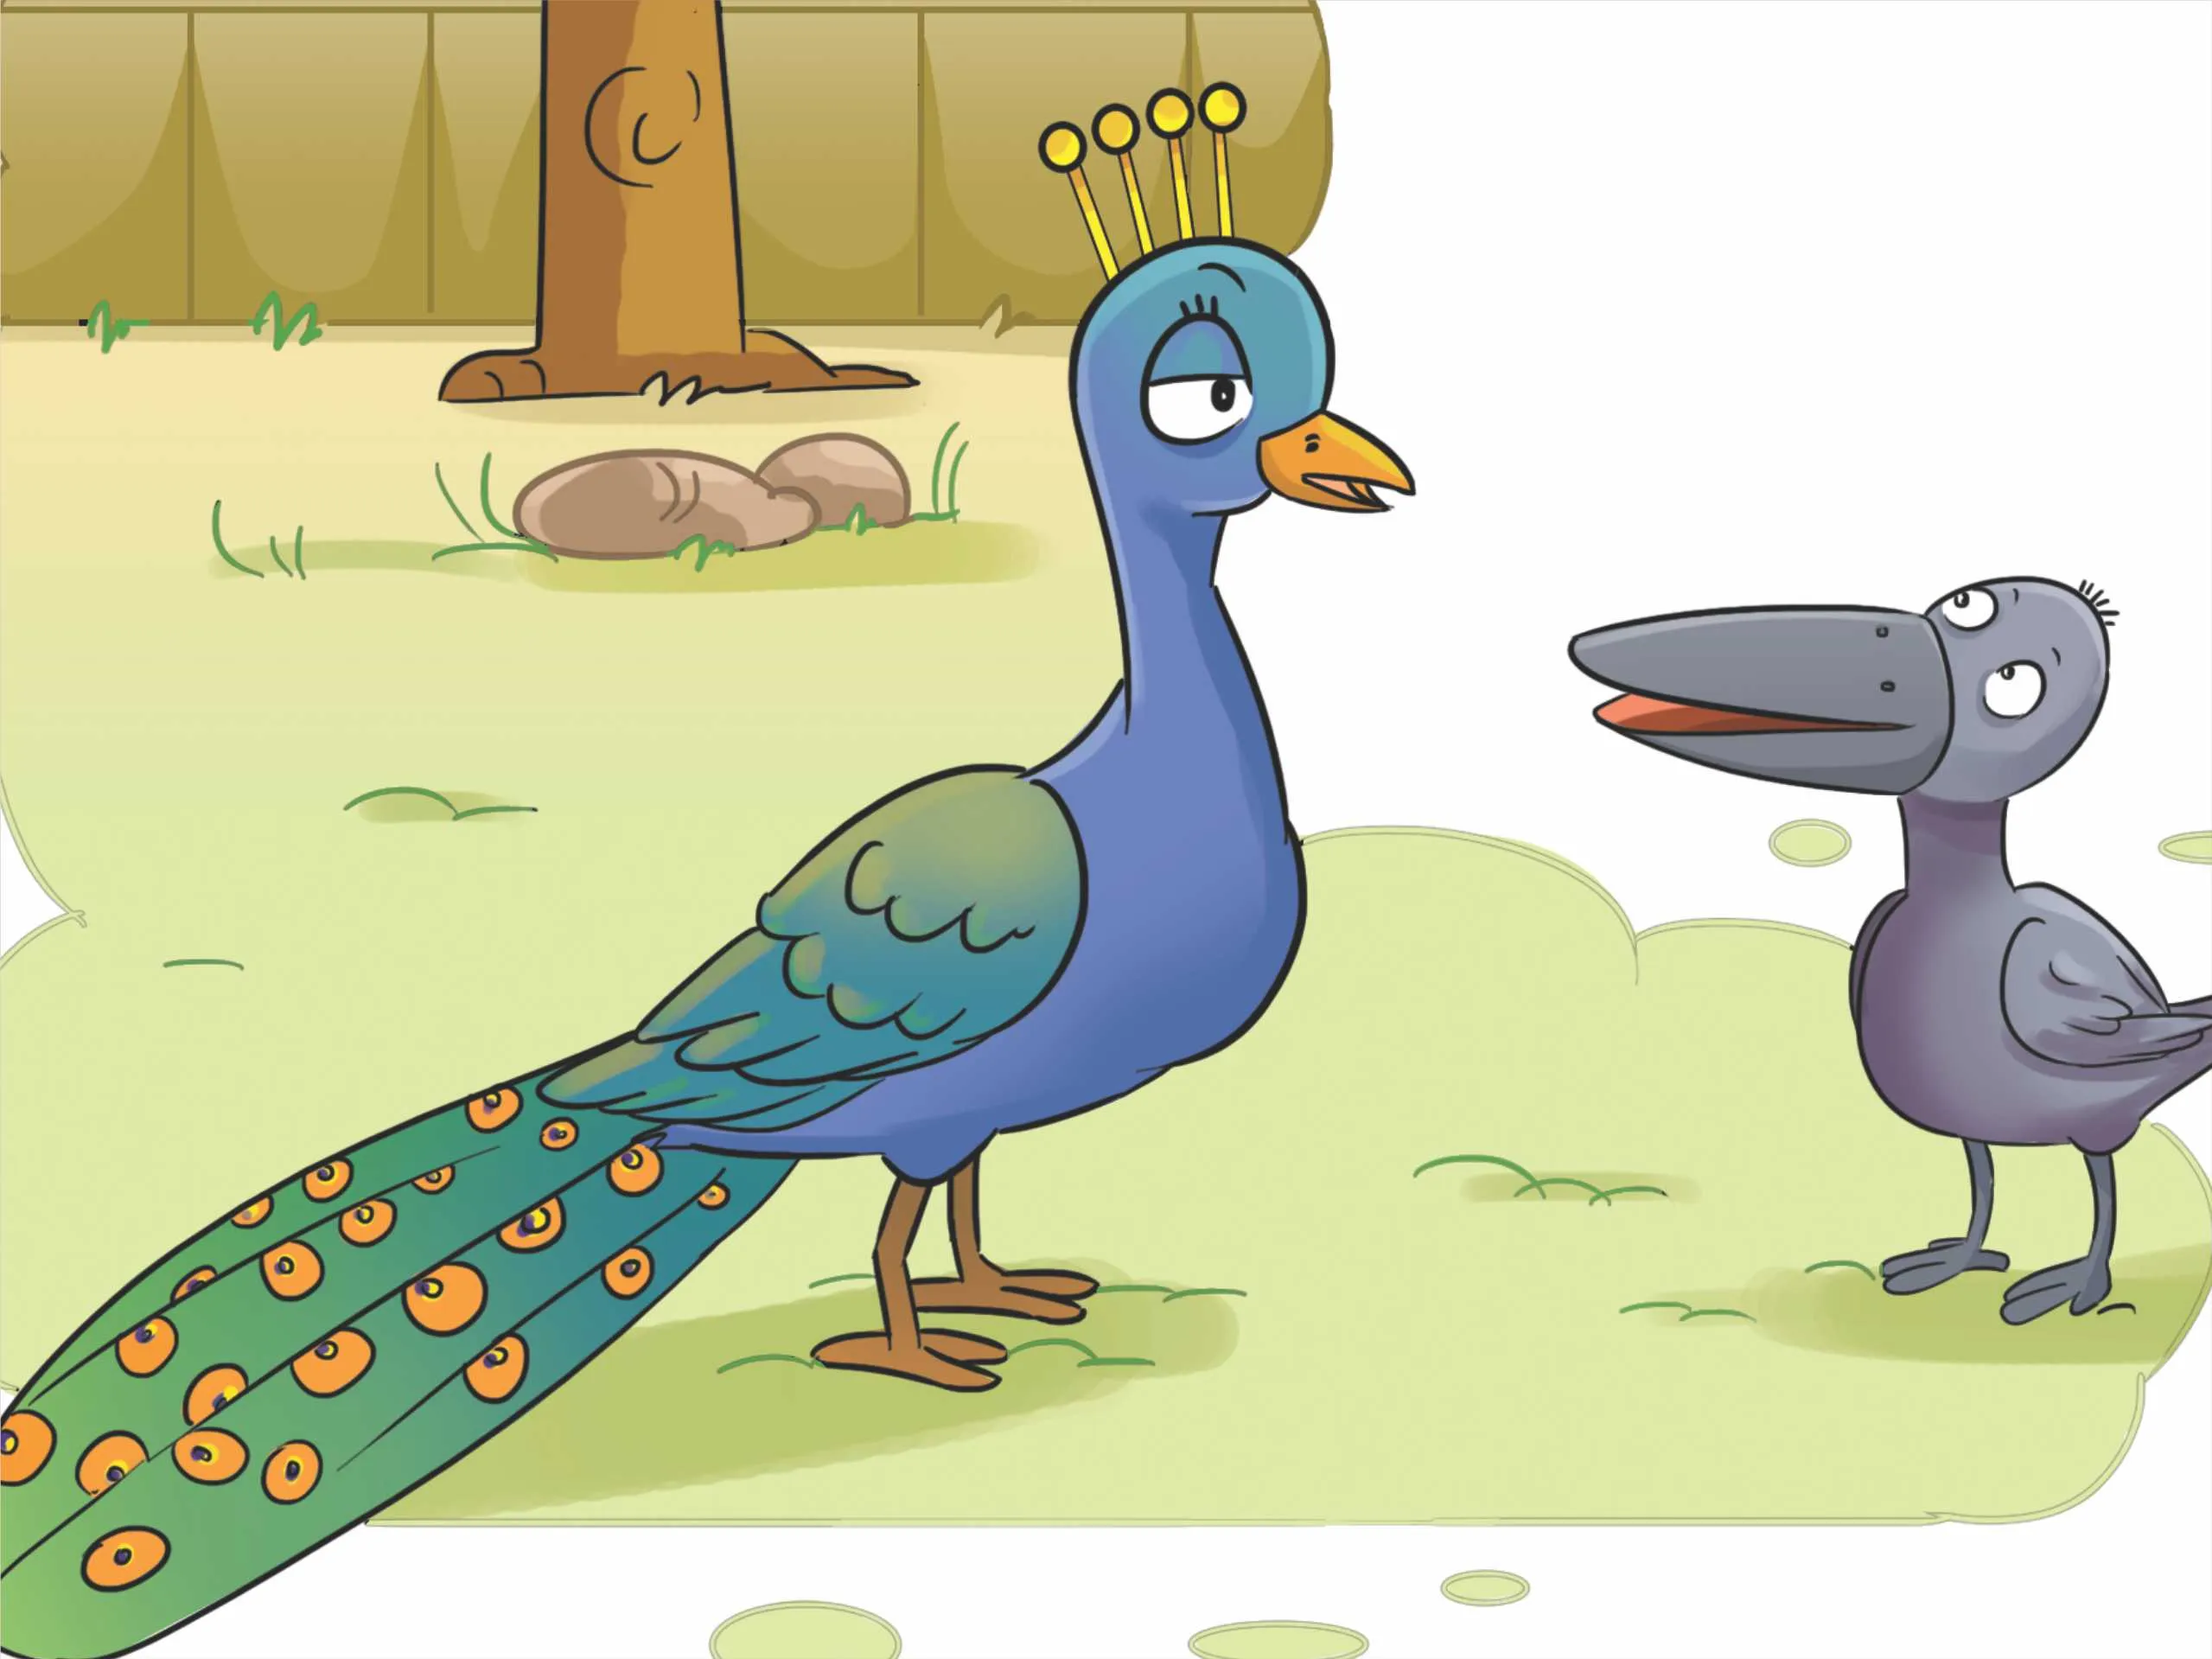 peacock and crow cartoon image